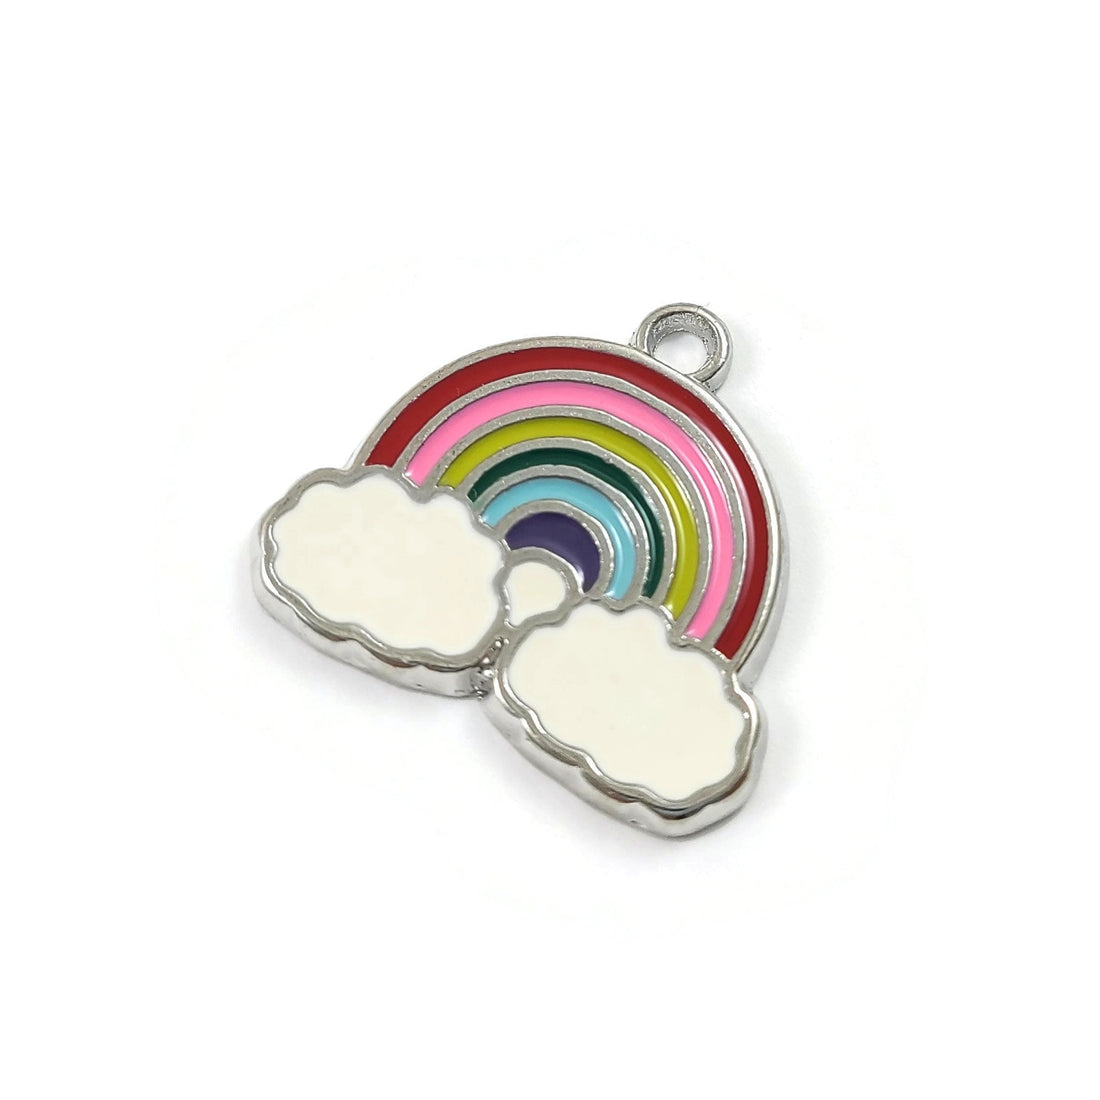 5 rainbow enamel charms, Nickel free metal pendants, Cute pendants for jewelry making